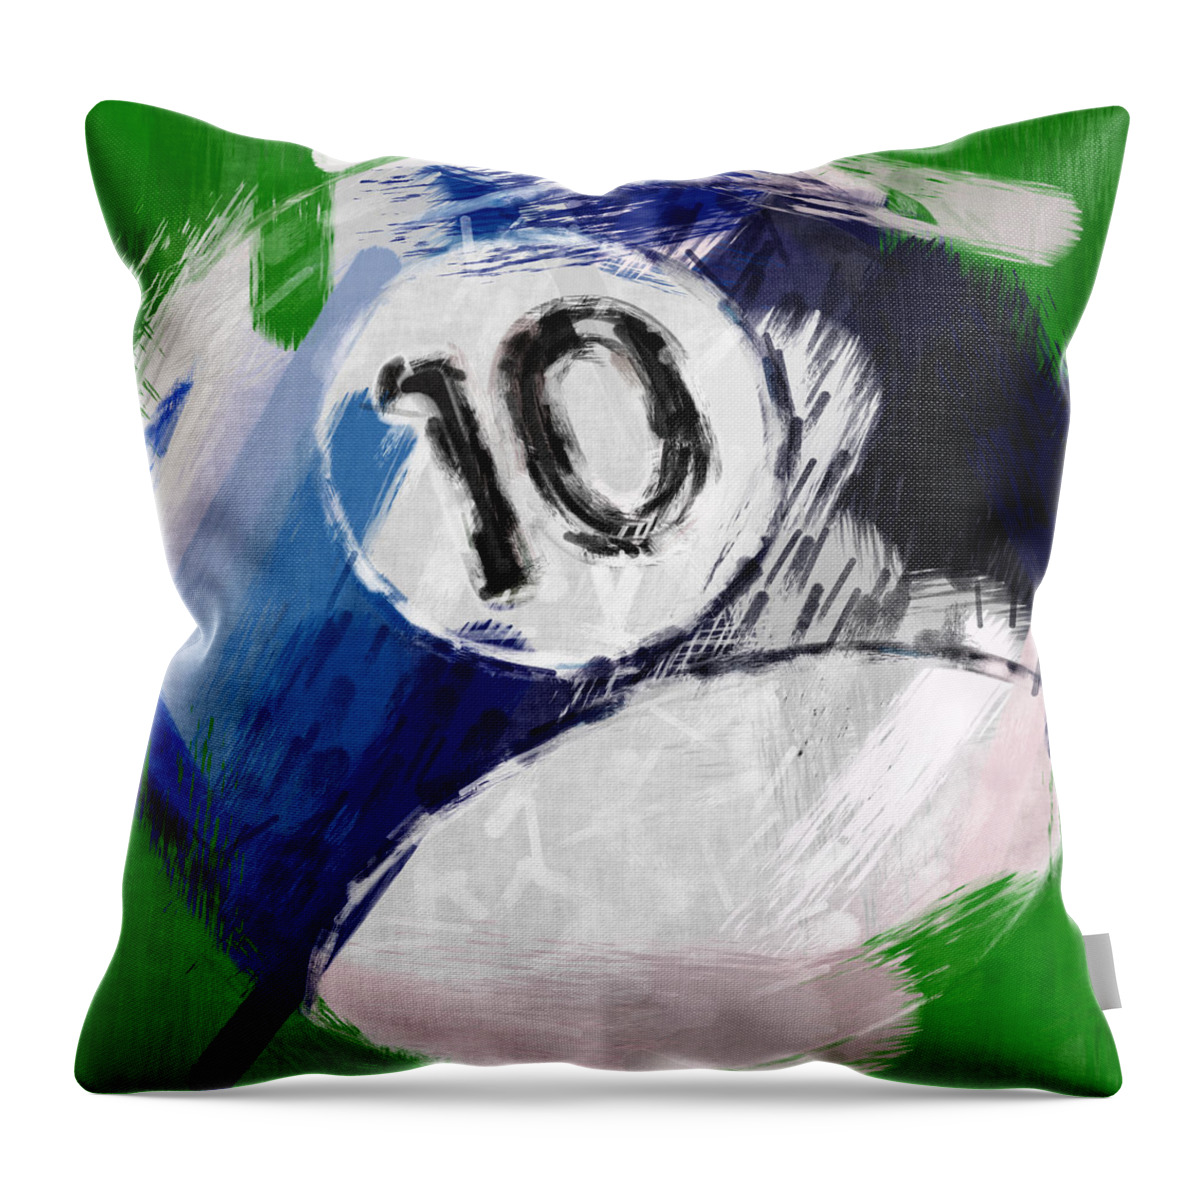 Ten Throw Pillow featuring the photograph Number Ten Billiards Ball Abstract by David G Paul